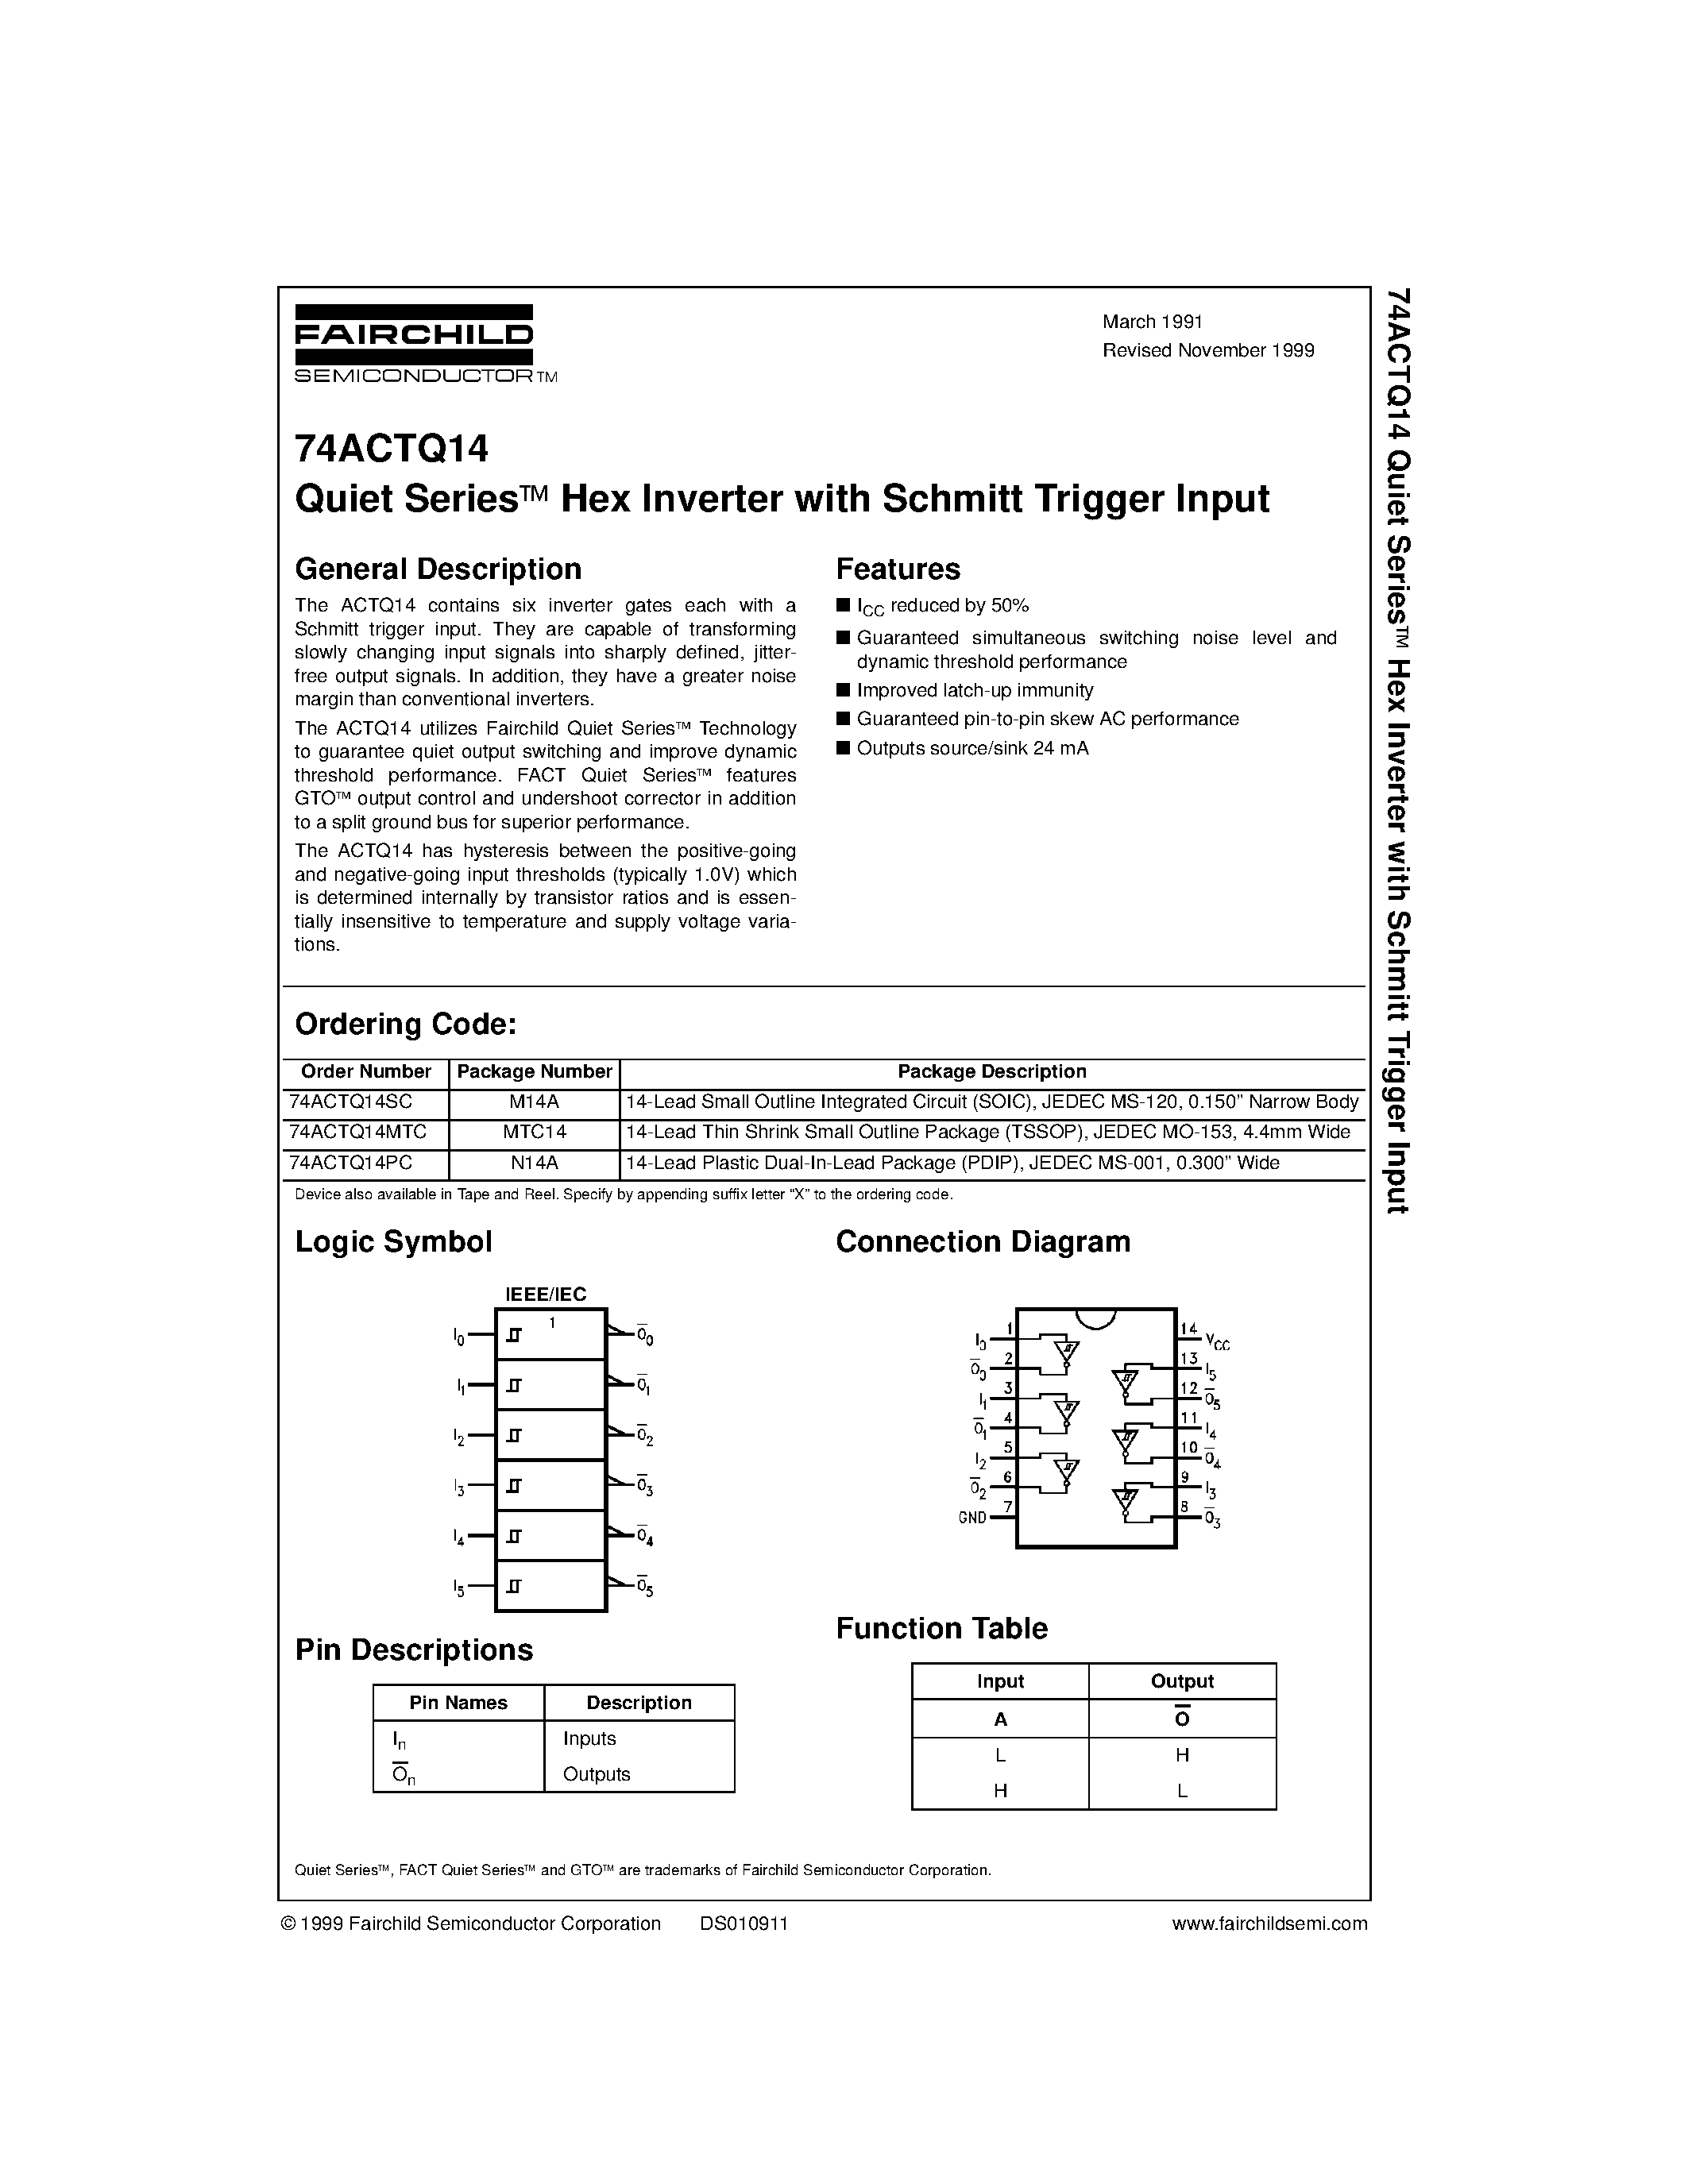 Даташит 74ACTQ14 - Quiet Series Hex Inverter with Schmitt Trigger Input страница 1